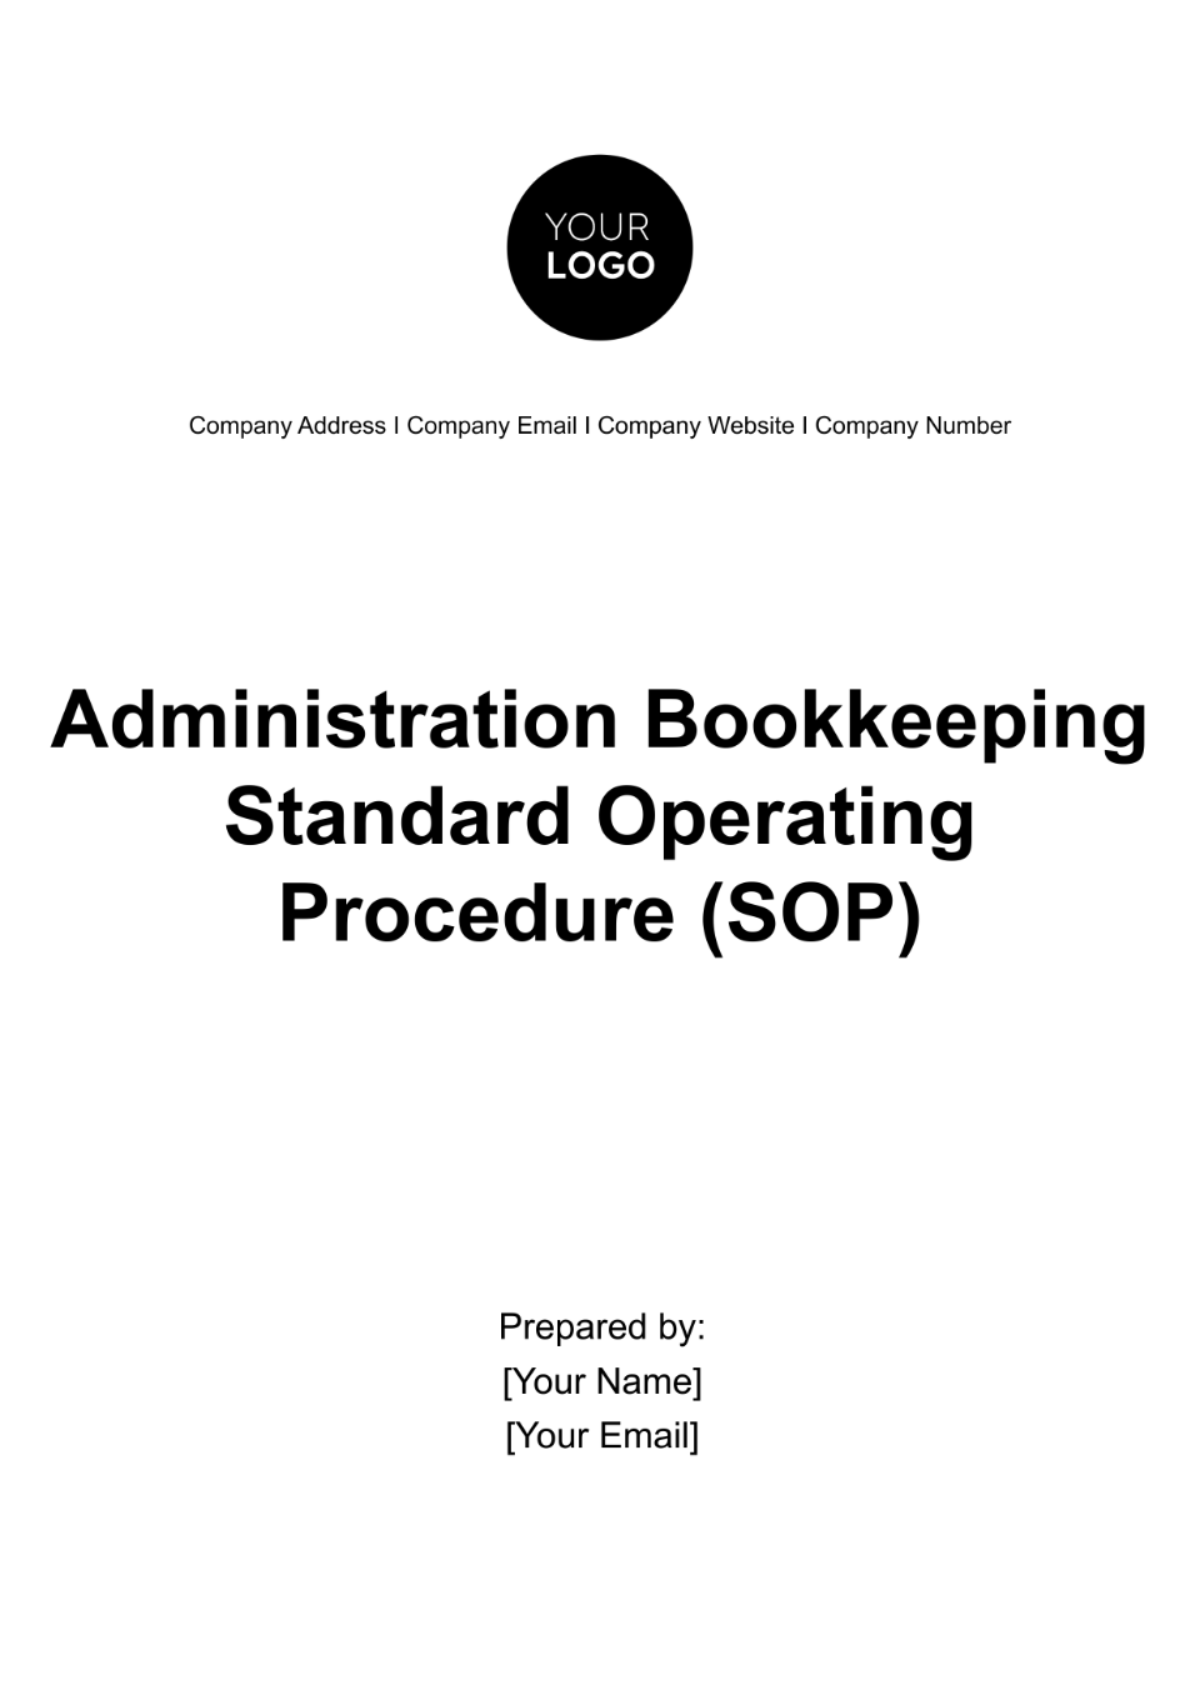 Administration Bookkeeping Standard Operating Procedure (SOP) Template